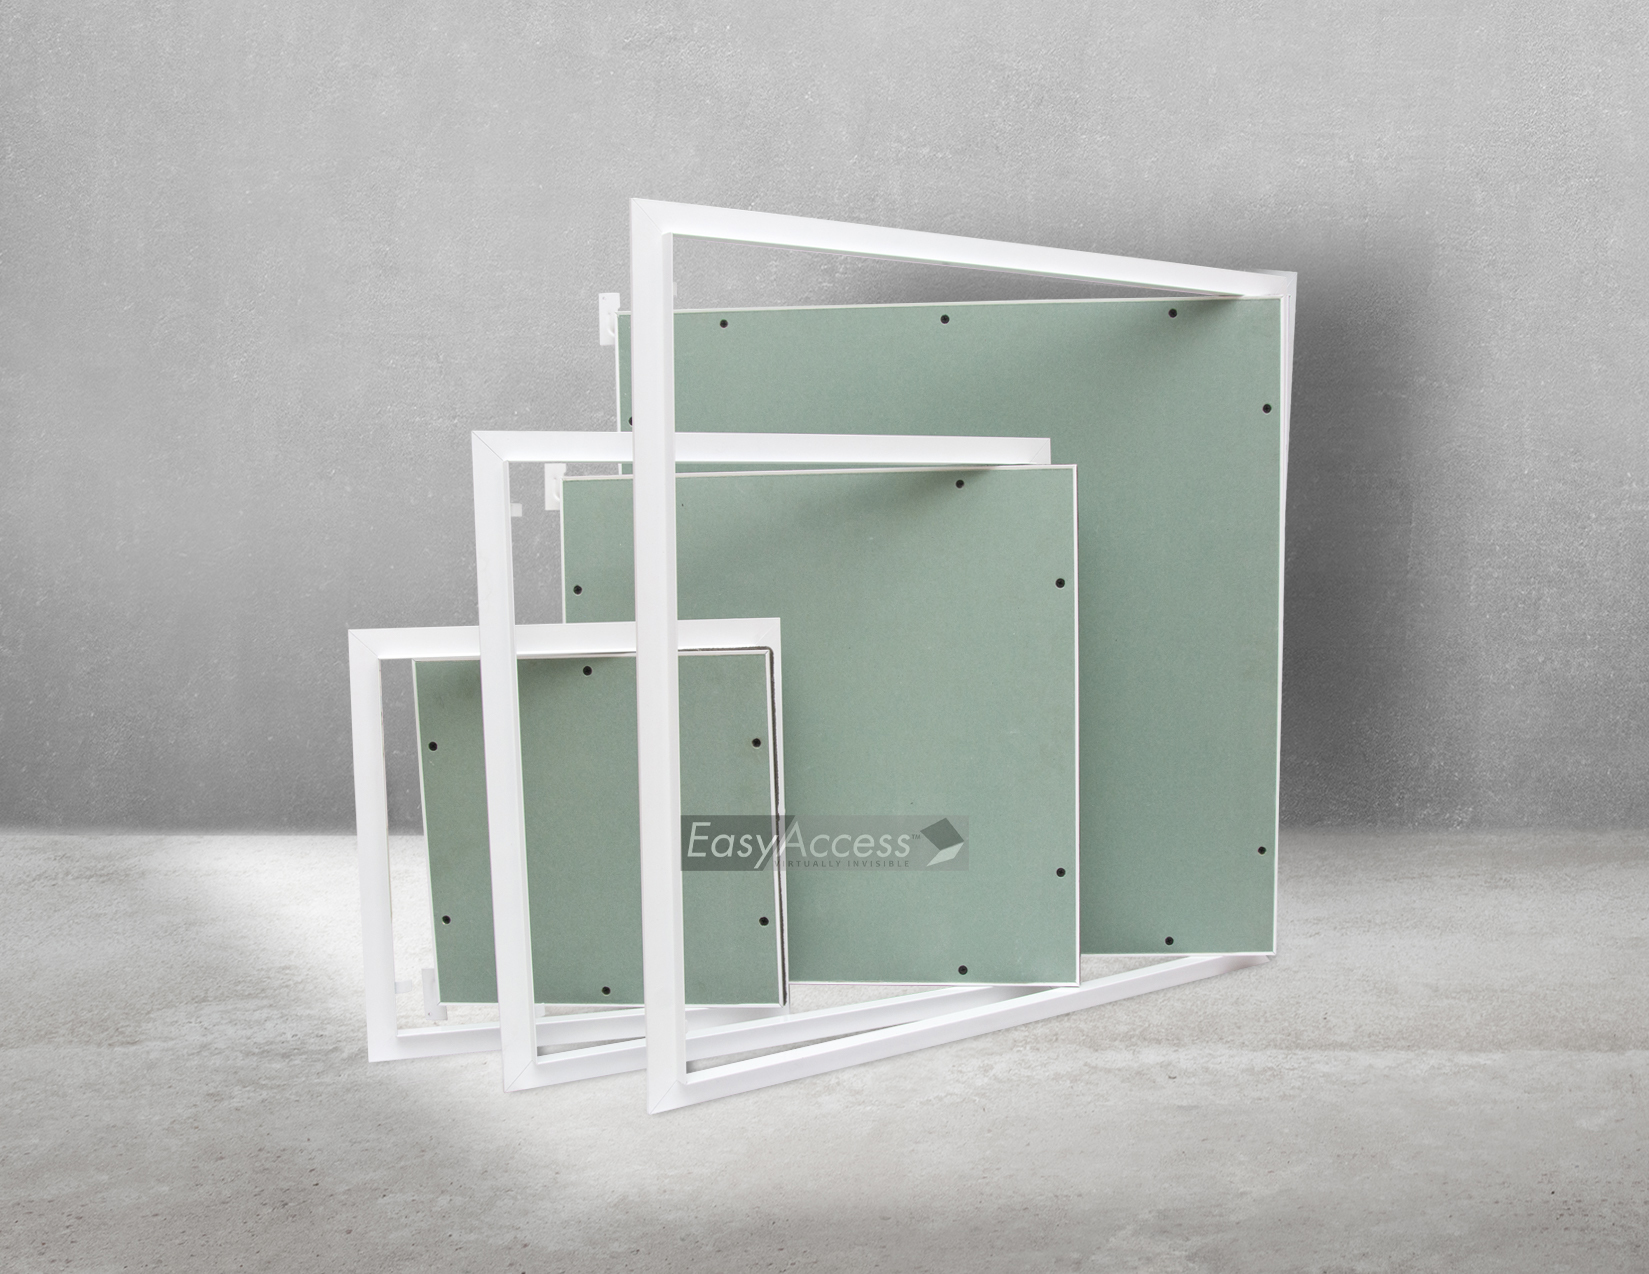 Aluminum Frame Access Panel Trap door